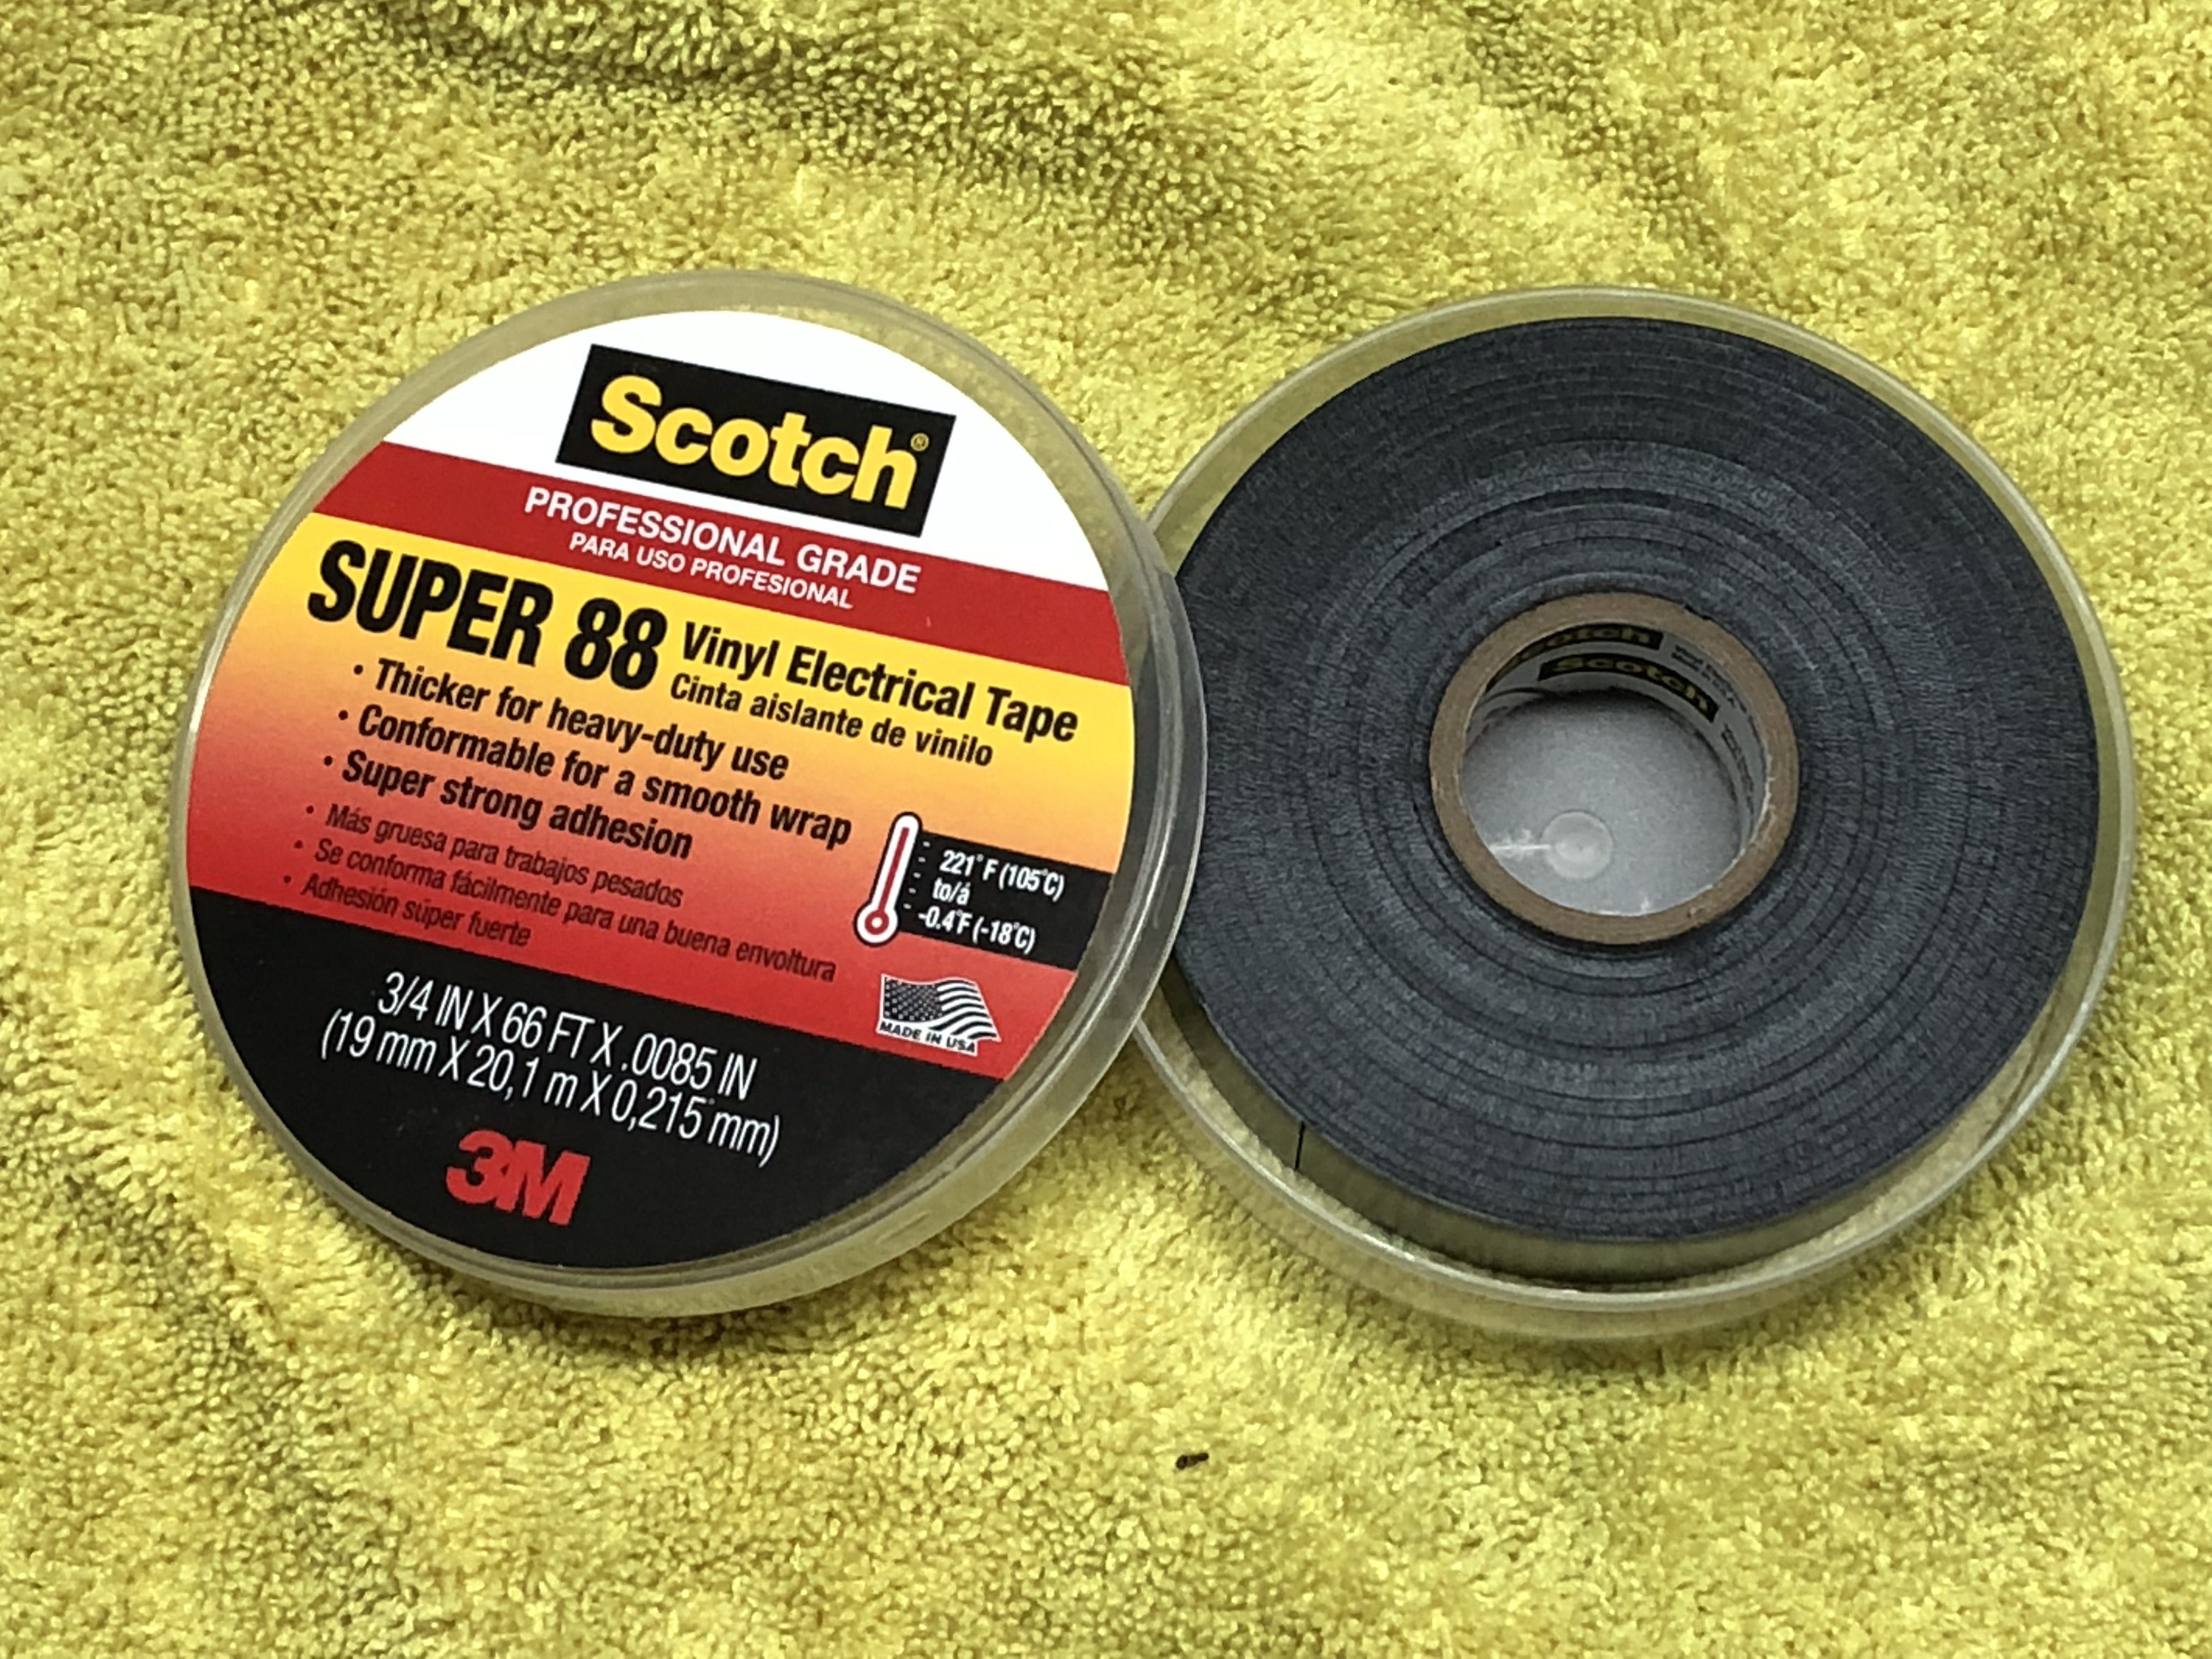 Mickey's RV8 Site  Good tape – 3m scotch super 88 vinyl